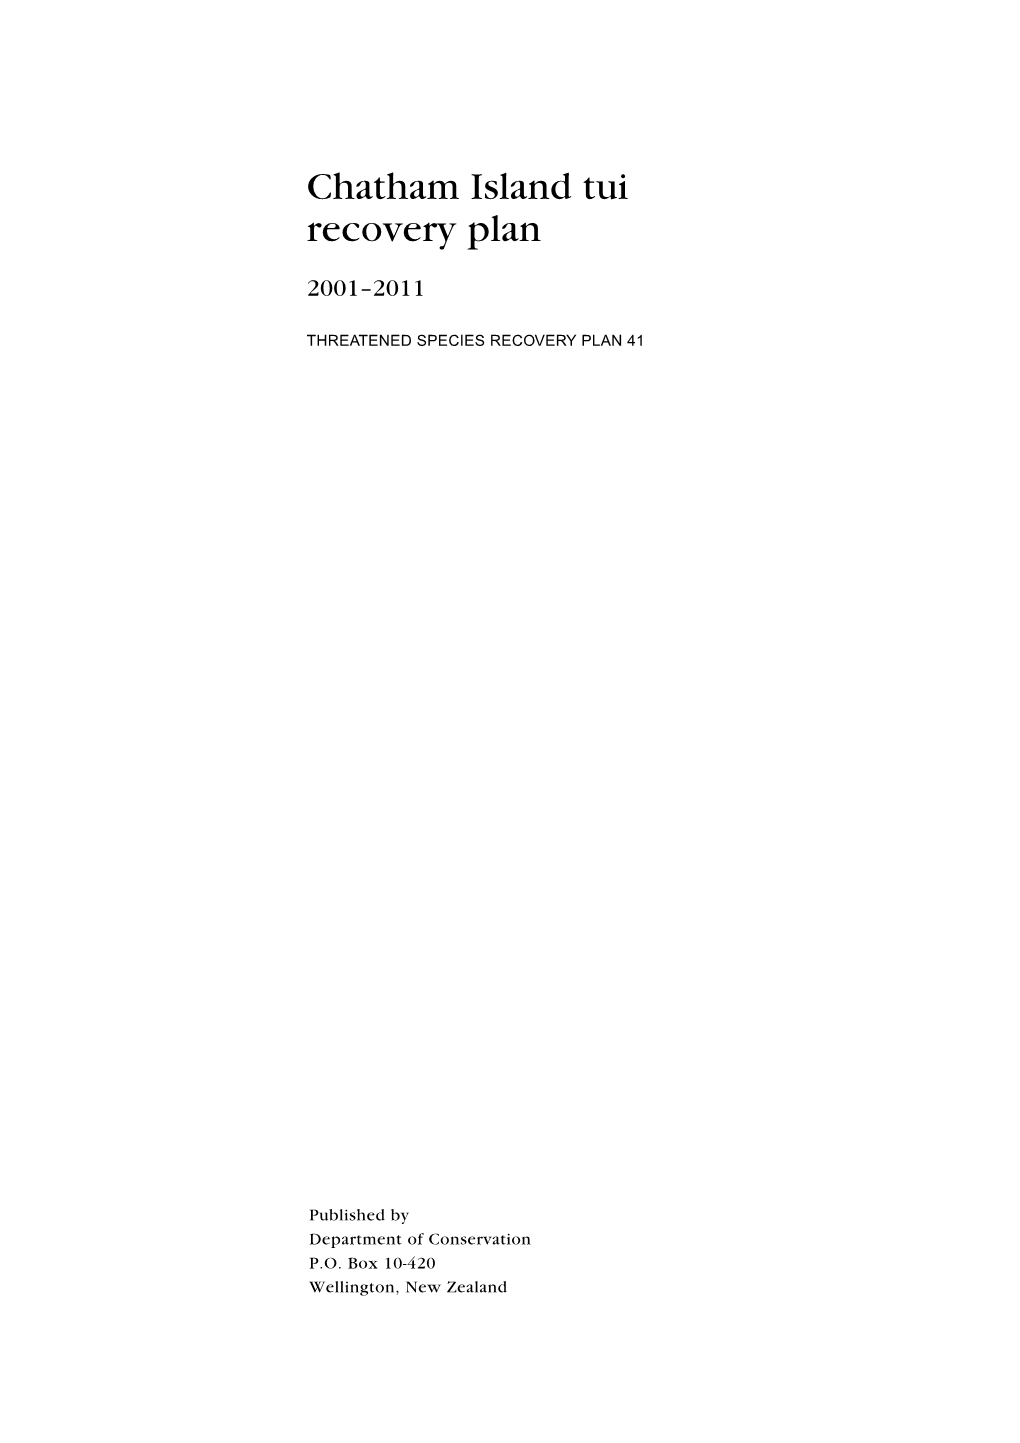 Chatham Island Tui Recovery Plan 2001-2011